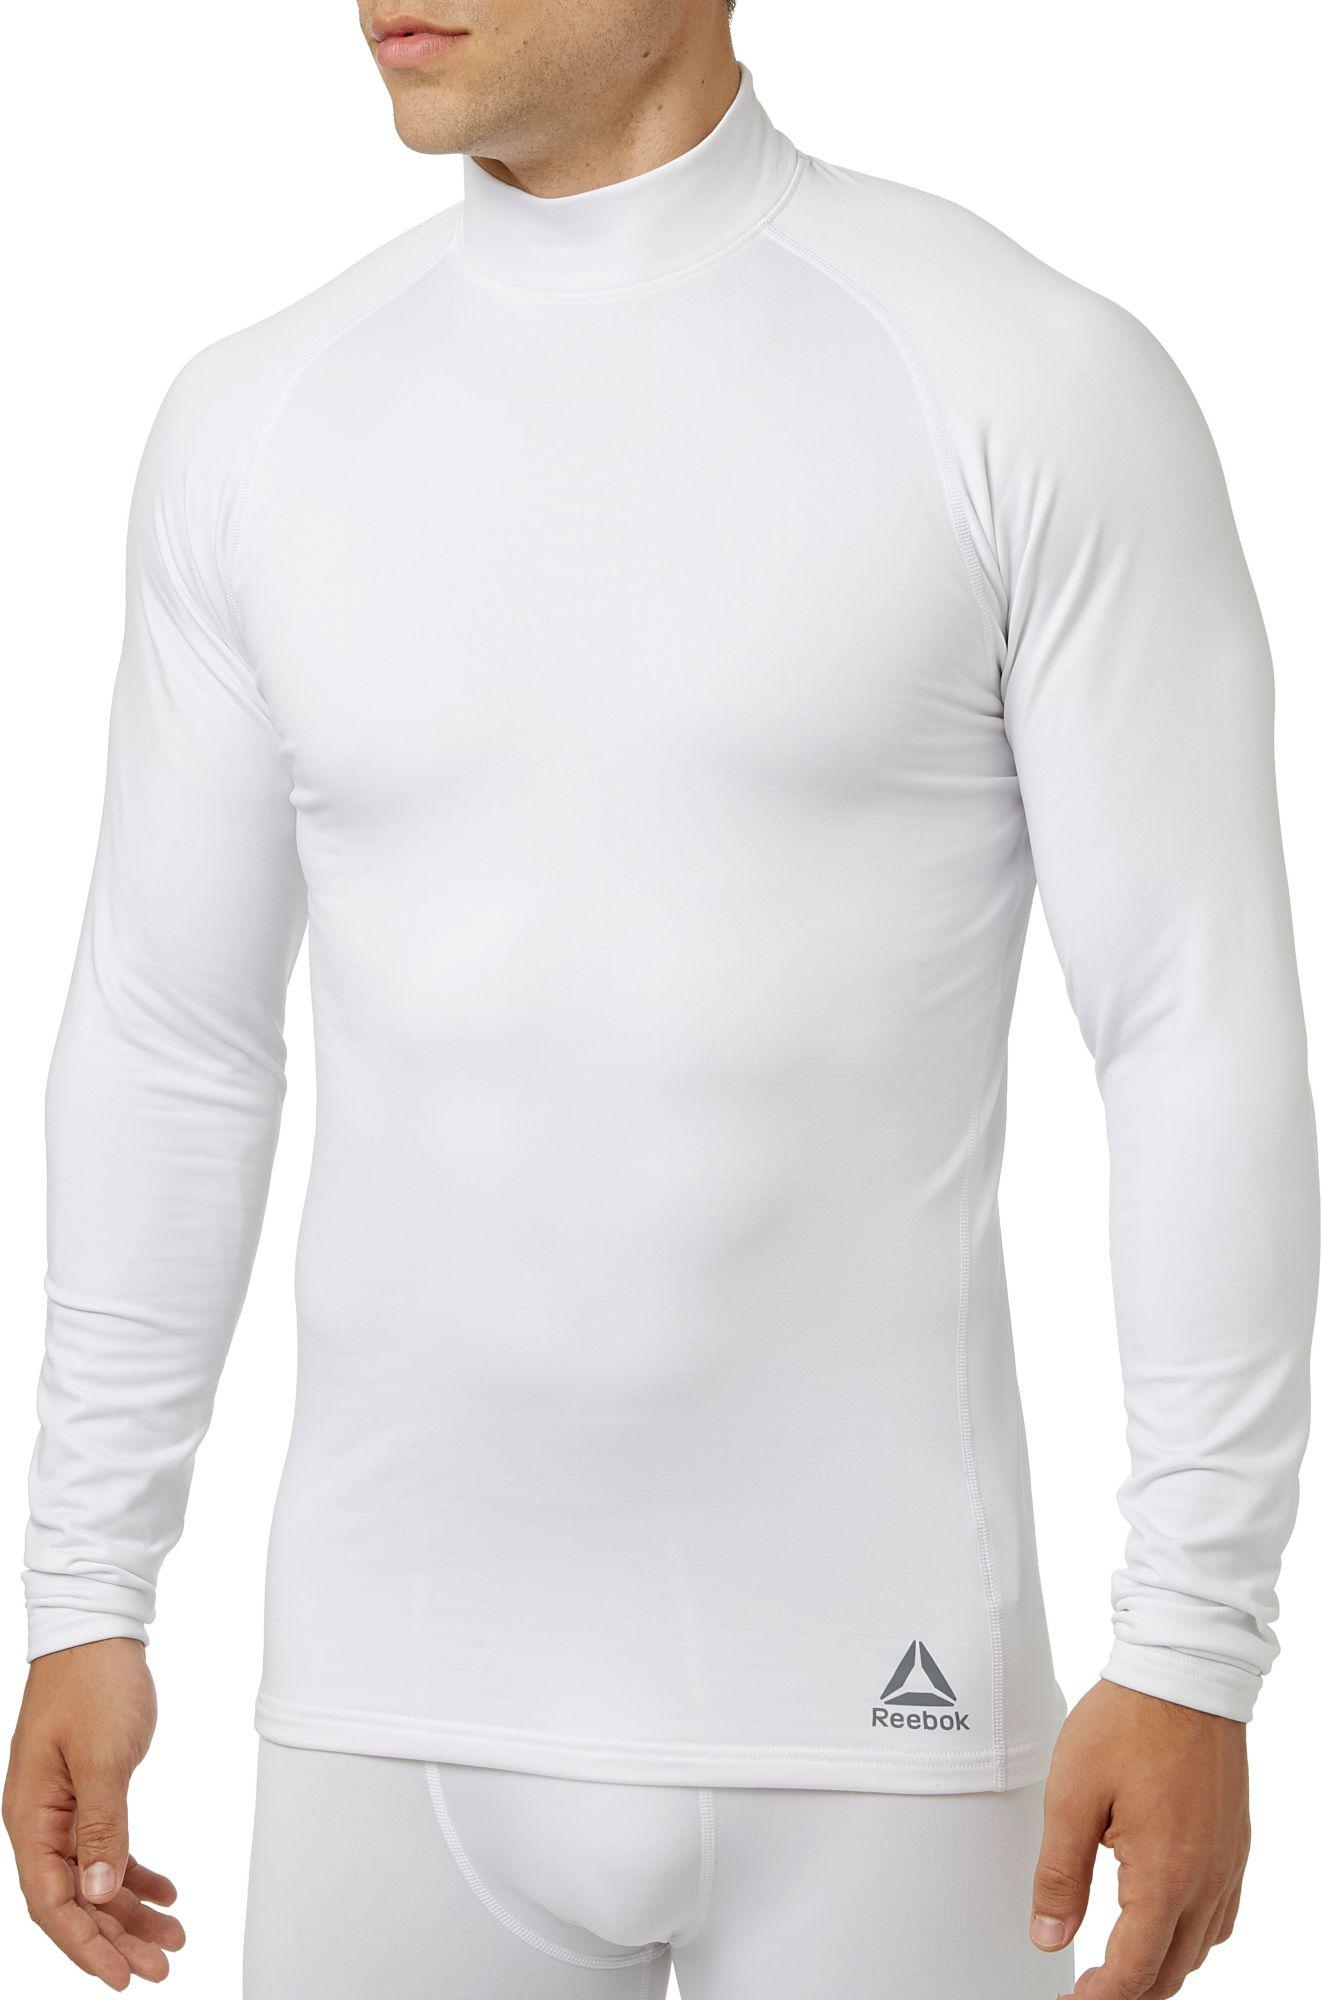 Reebok Men's Cold Weather Compression Novelty Long Sleeve Shirt Latvia,  SAVE 32% - eagleflair.com